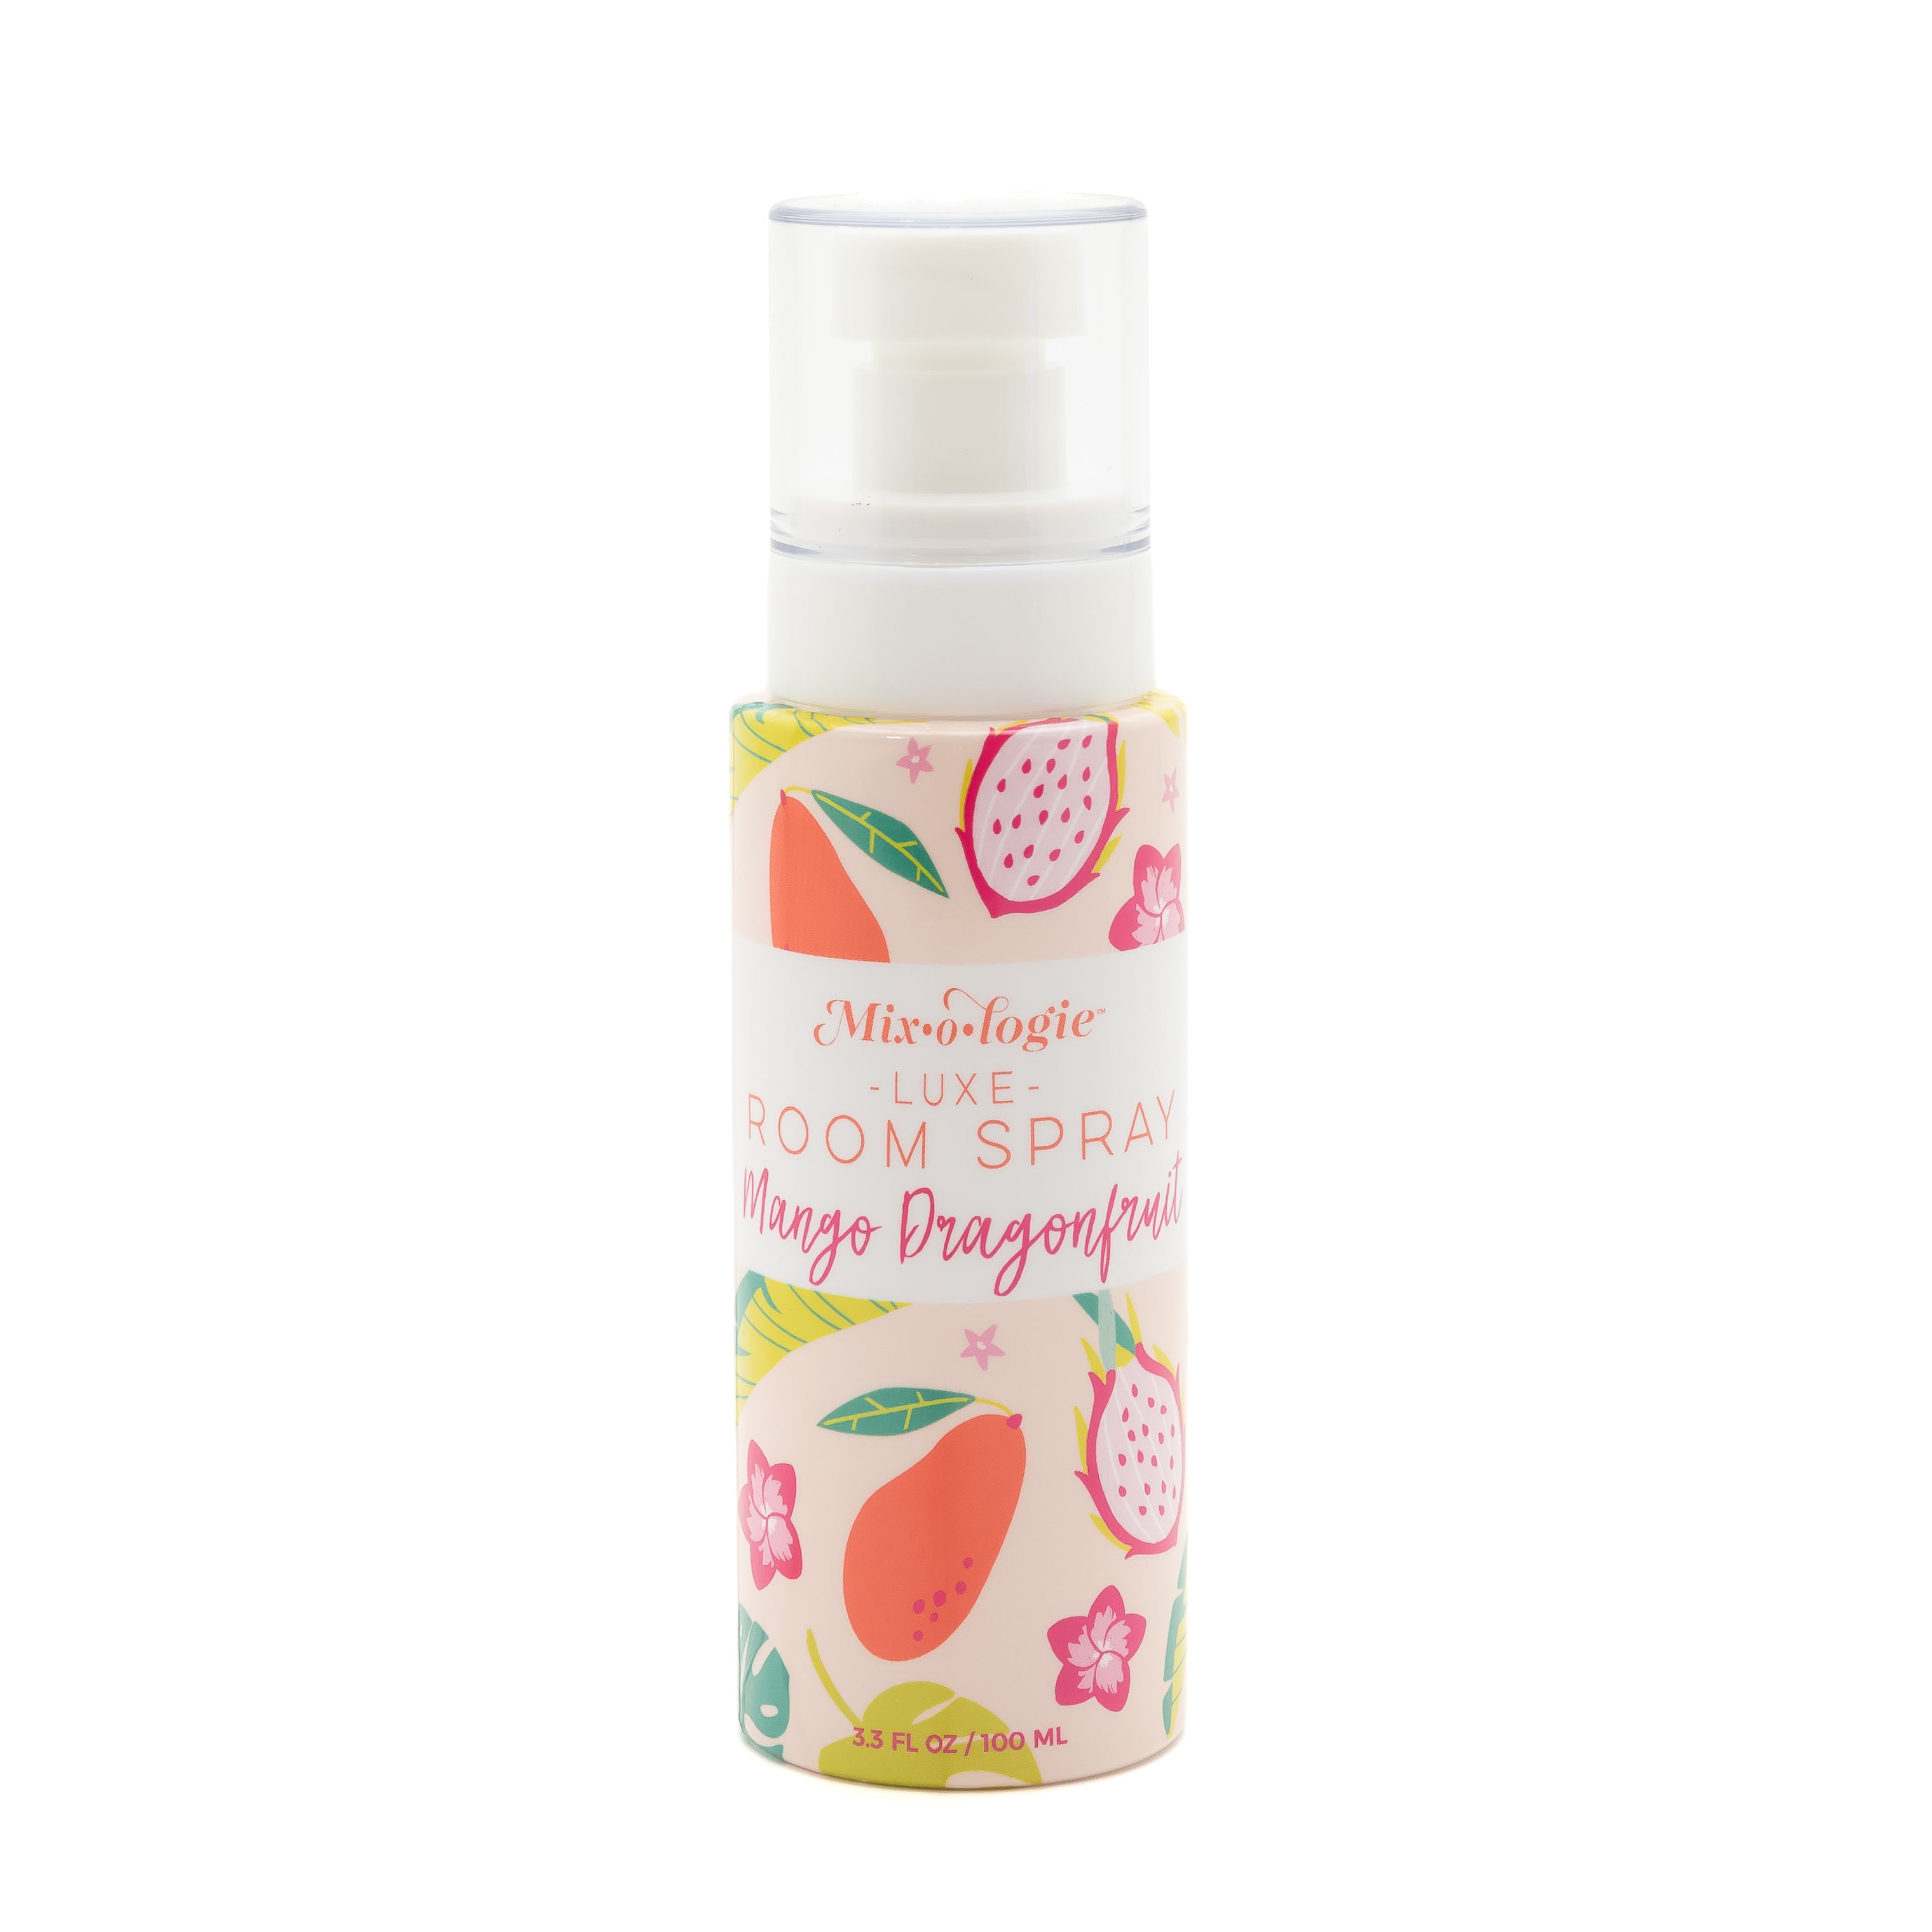 Mango Dragonfruit Luxe Room Spray